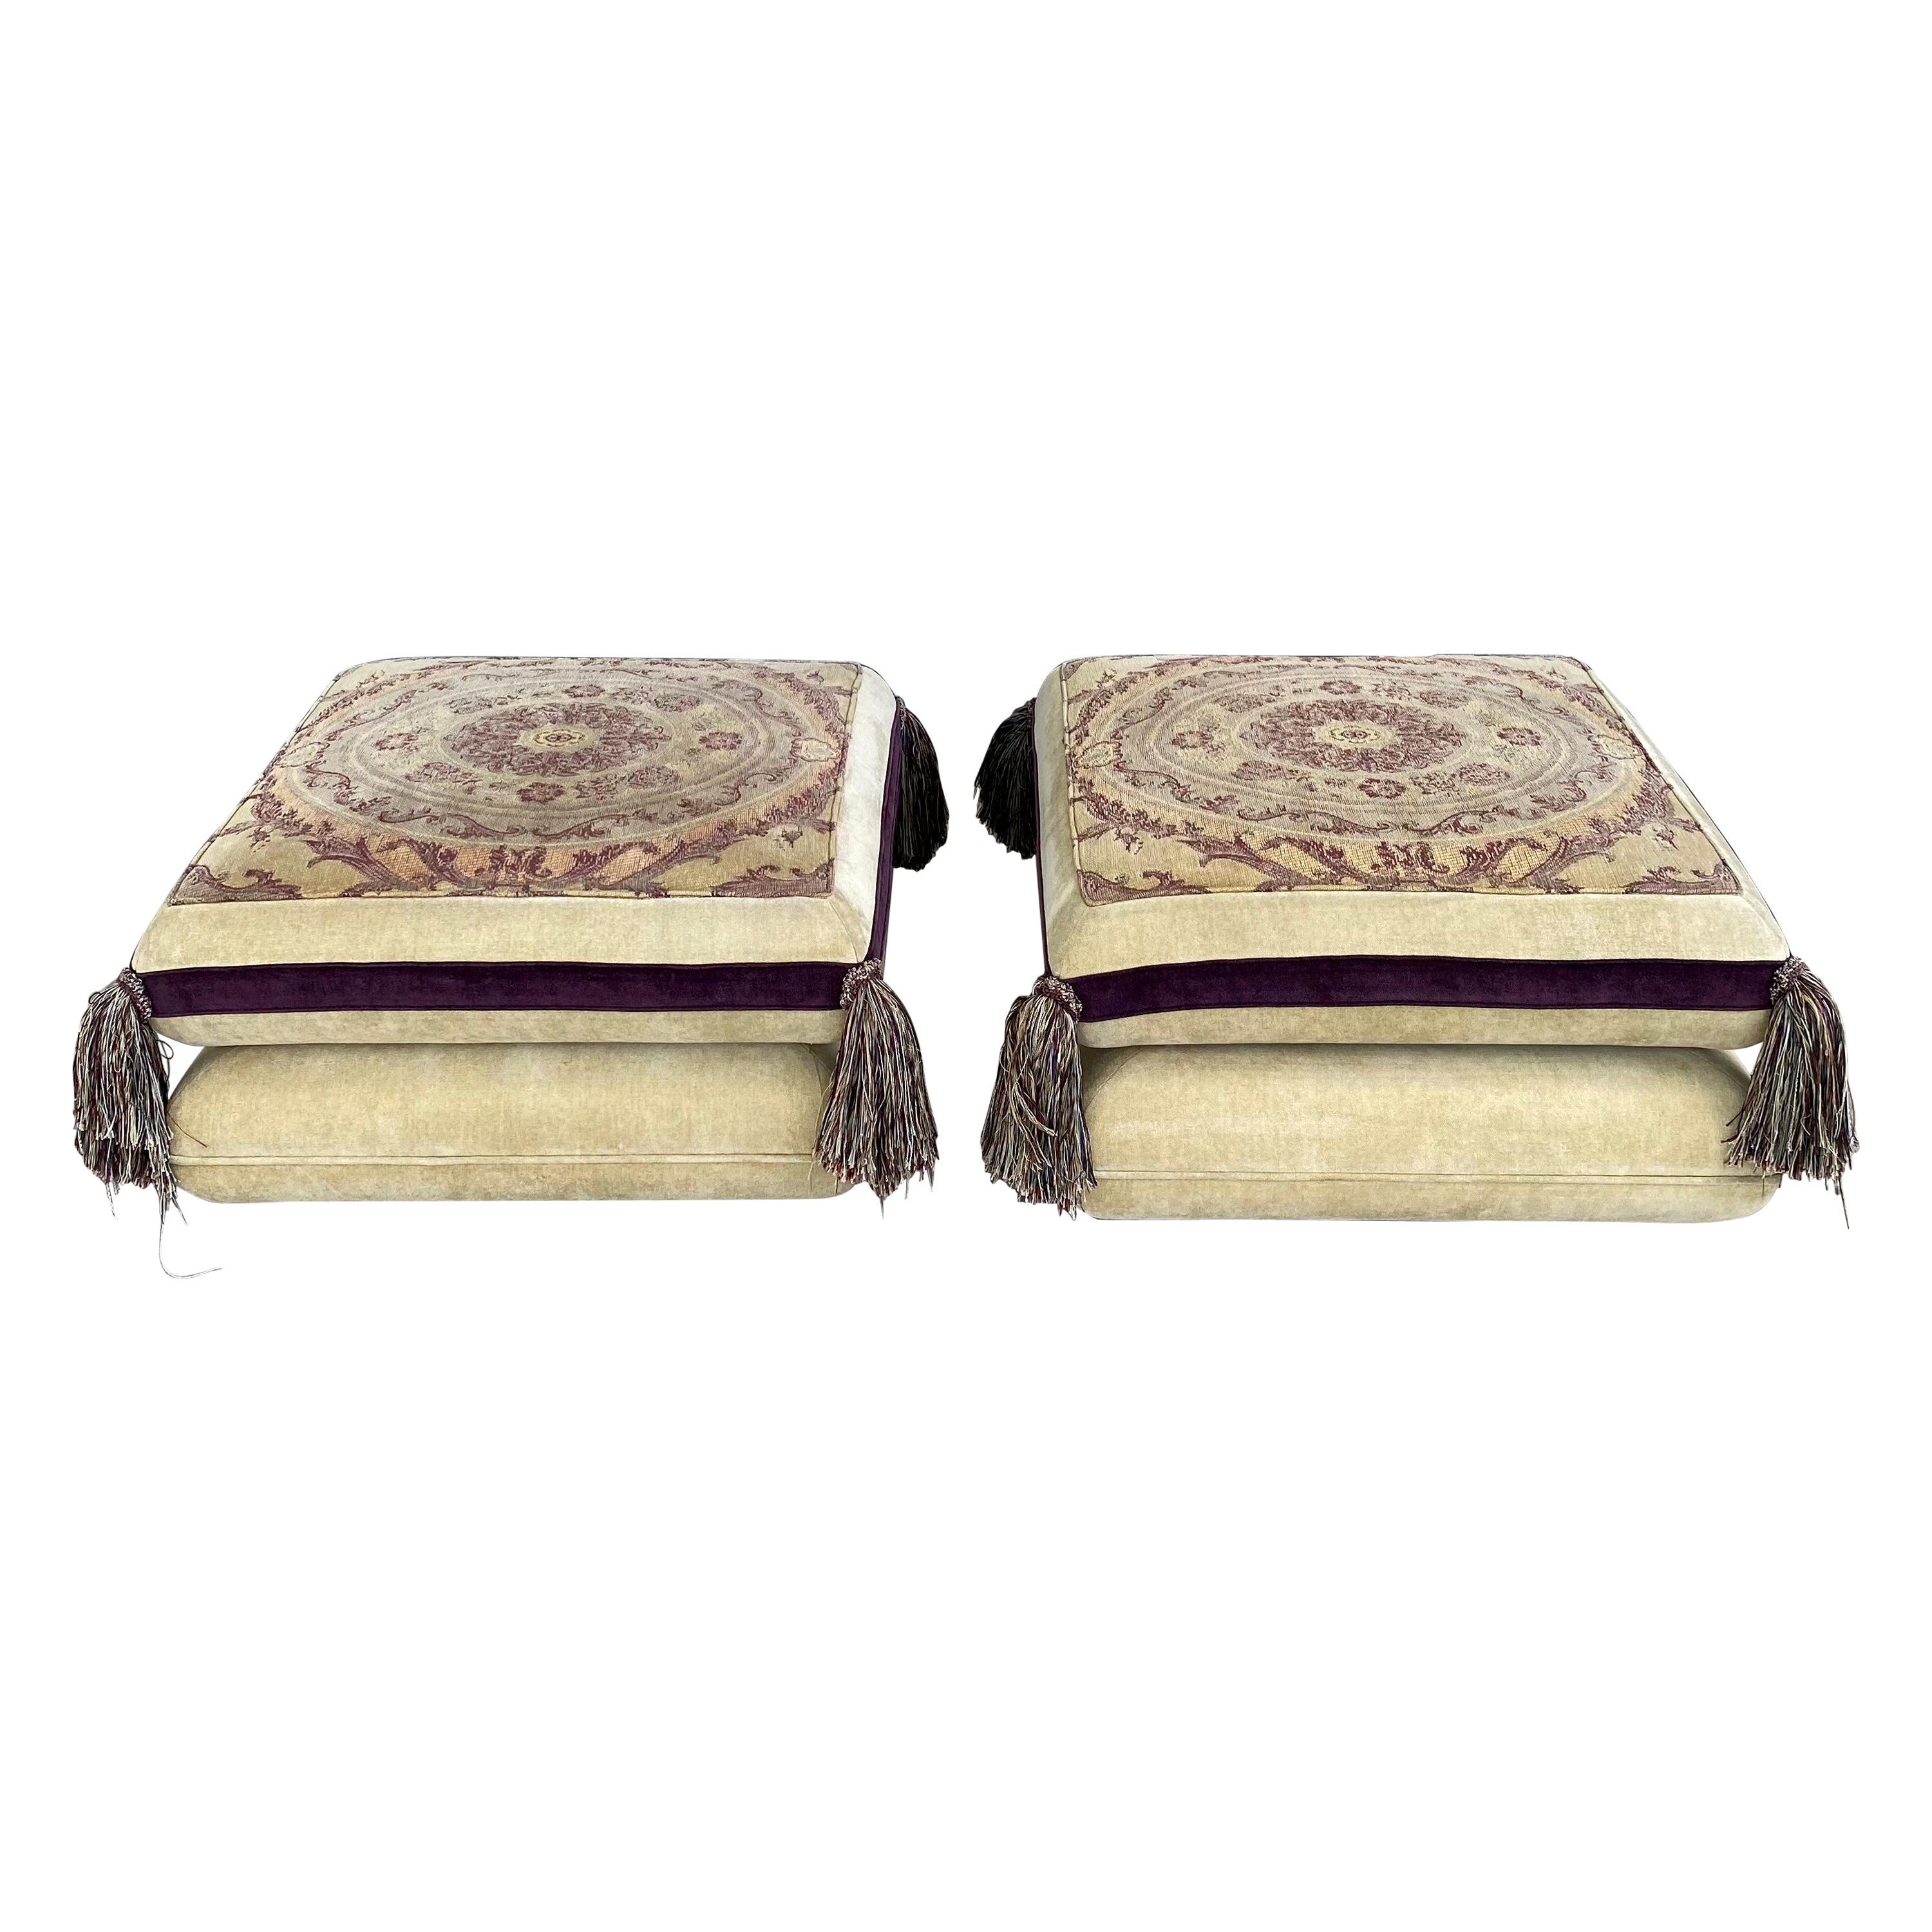 Rare Roche Bobois “Mah Jong” Style Floor Pillowtop Ottoman Stools, Set of 2 For Sale